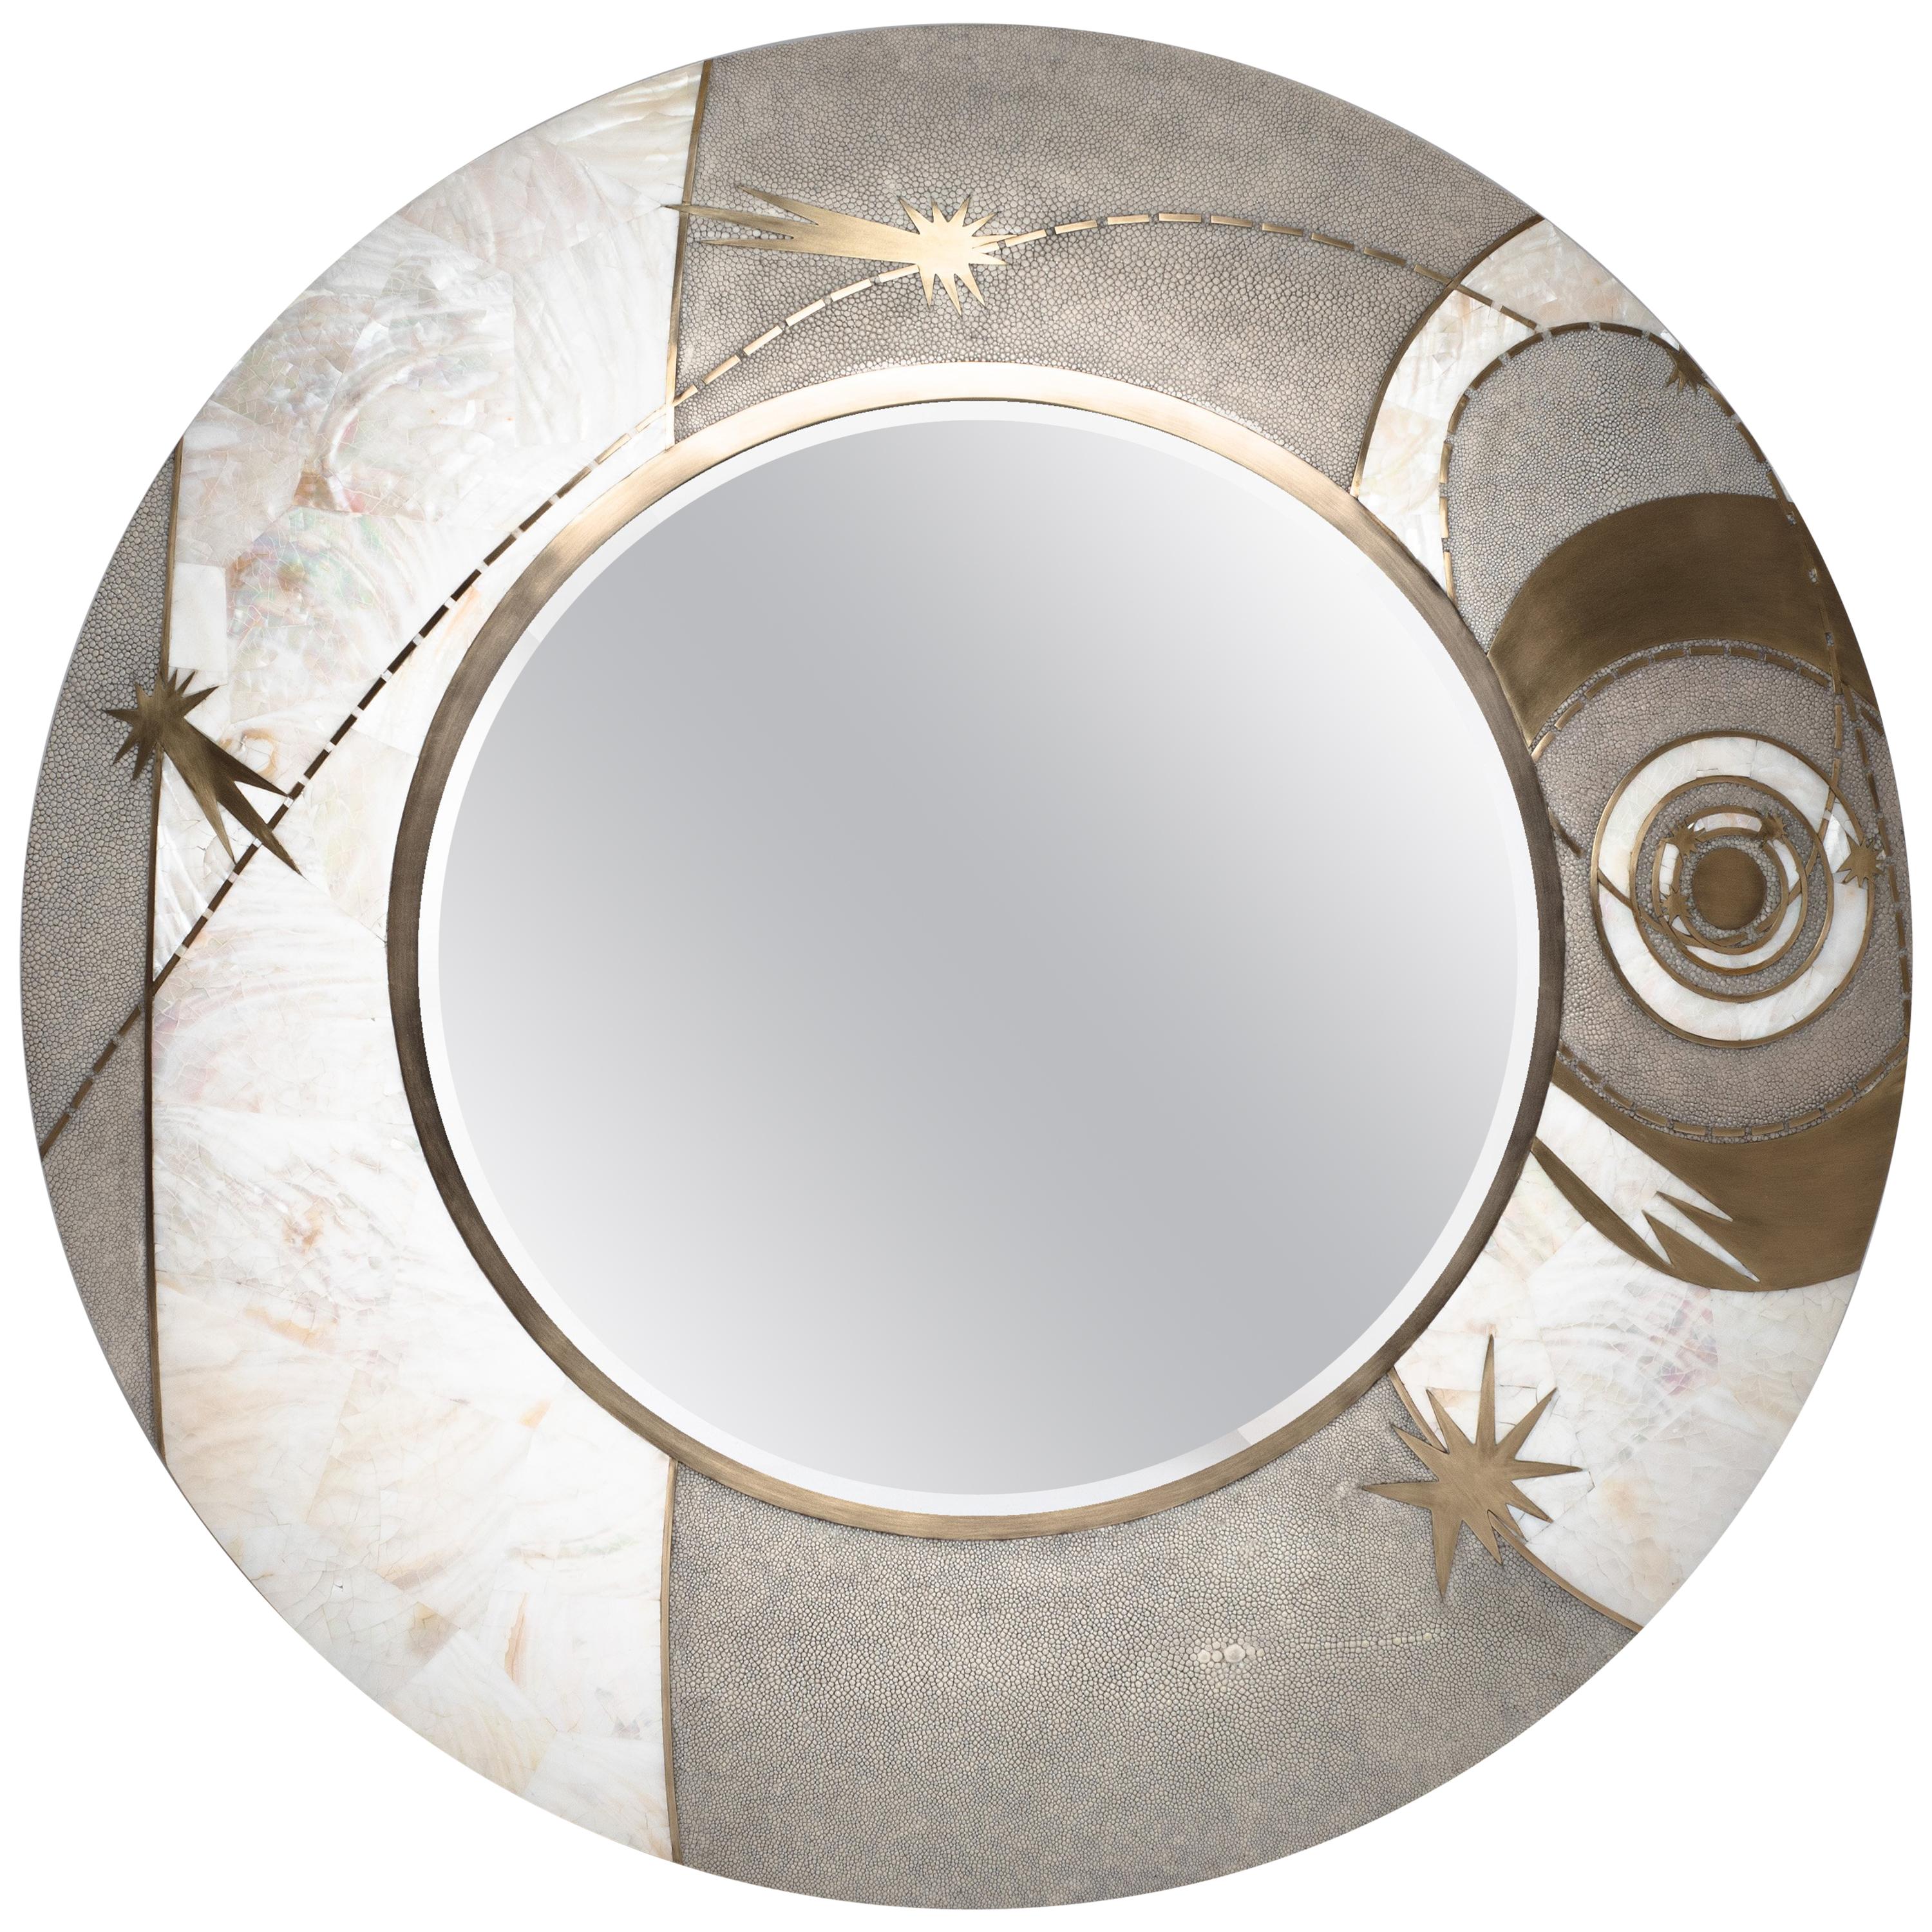 Constellation Mirror in Cream Shagreen Shell & Bronze-Patina Brass by Kifu Paris